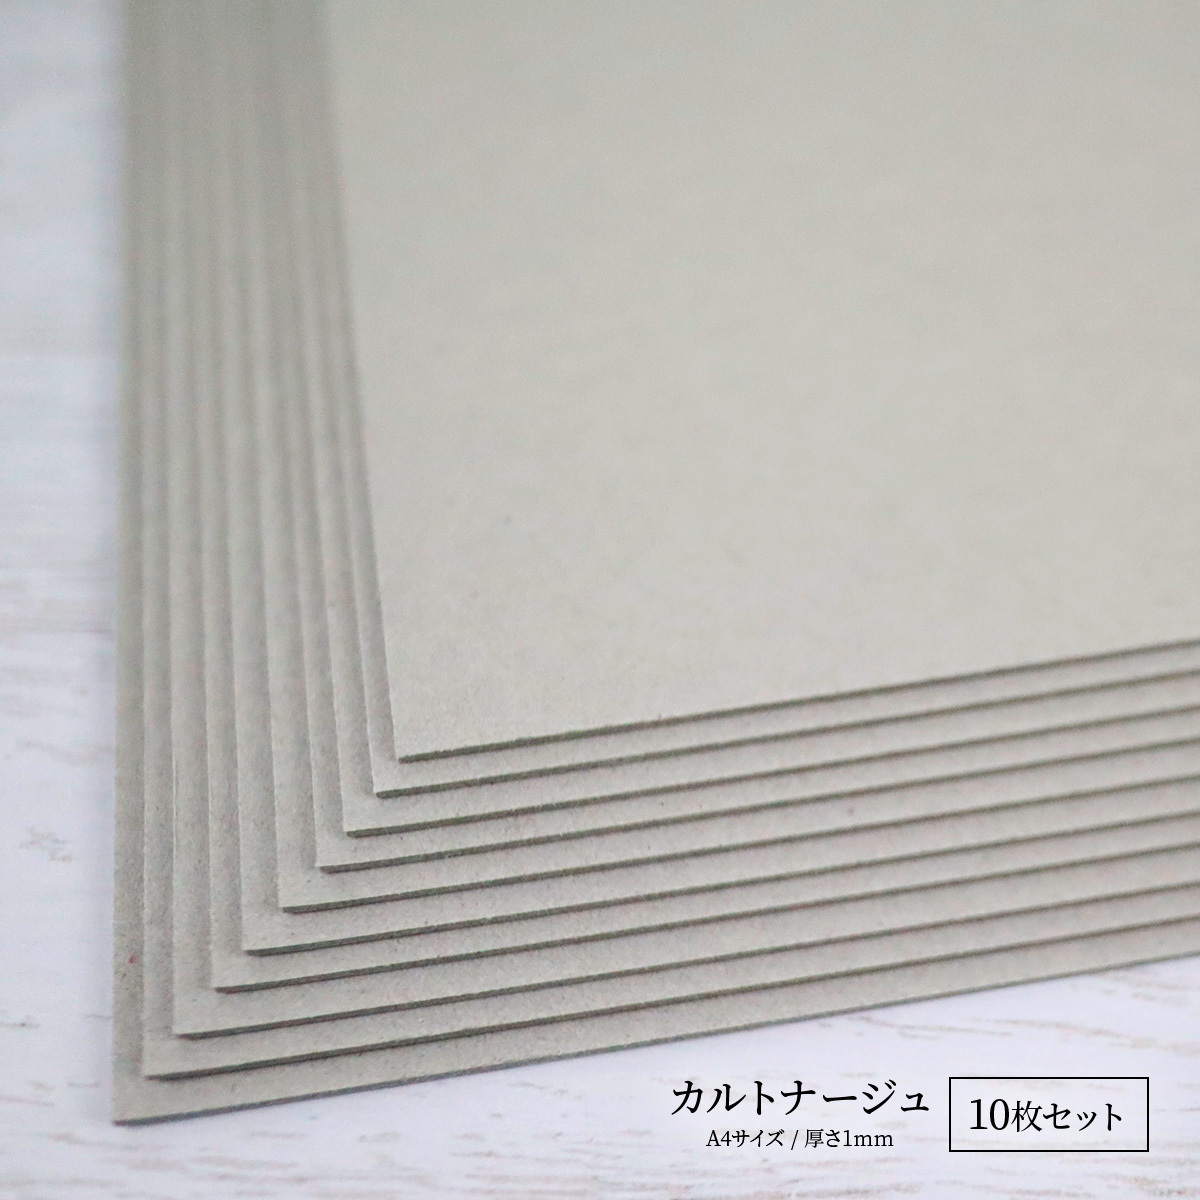  сделано в Японии karu тонер ju материал толщина бумага картон A4 размер толщина 1mm 10 листов 210mm x 297mmg грабли to jig zo- мозаика ручная работа 